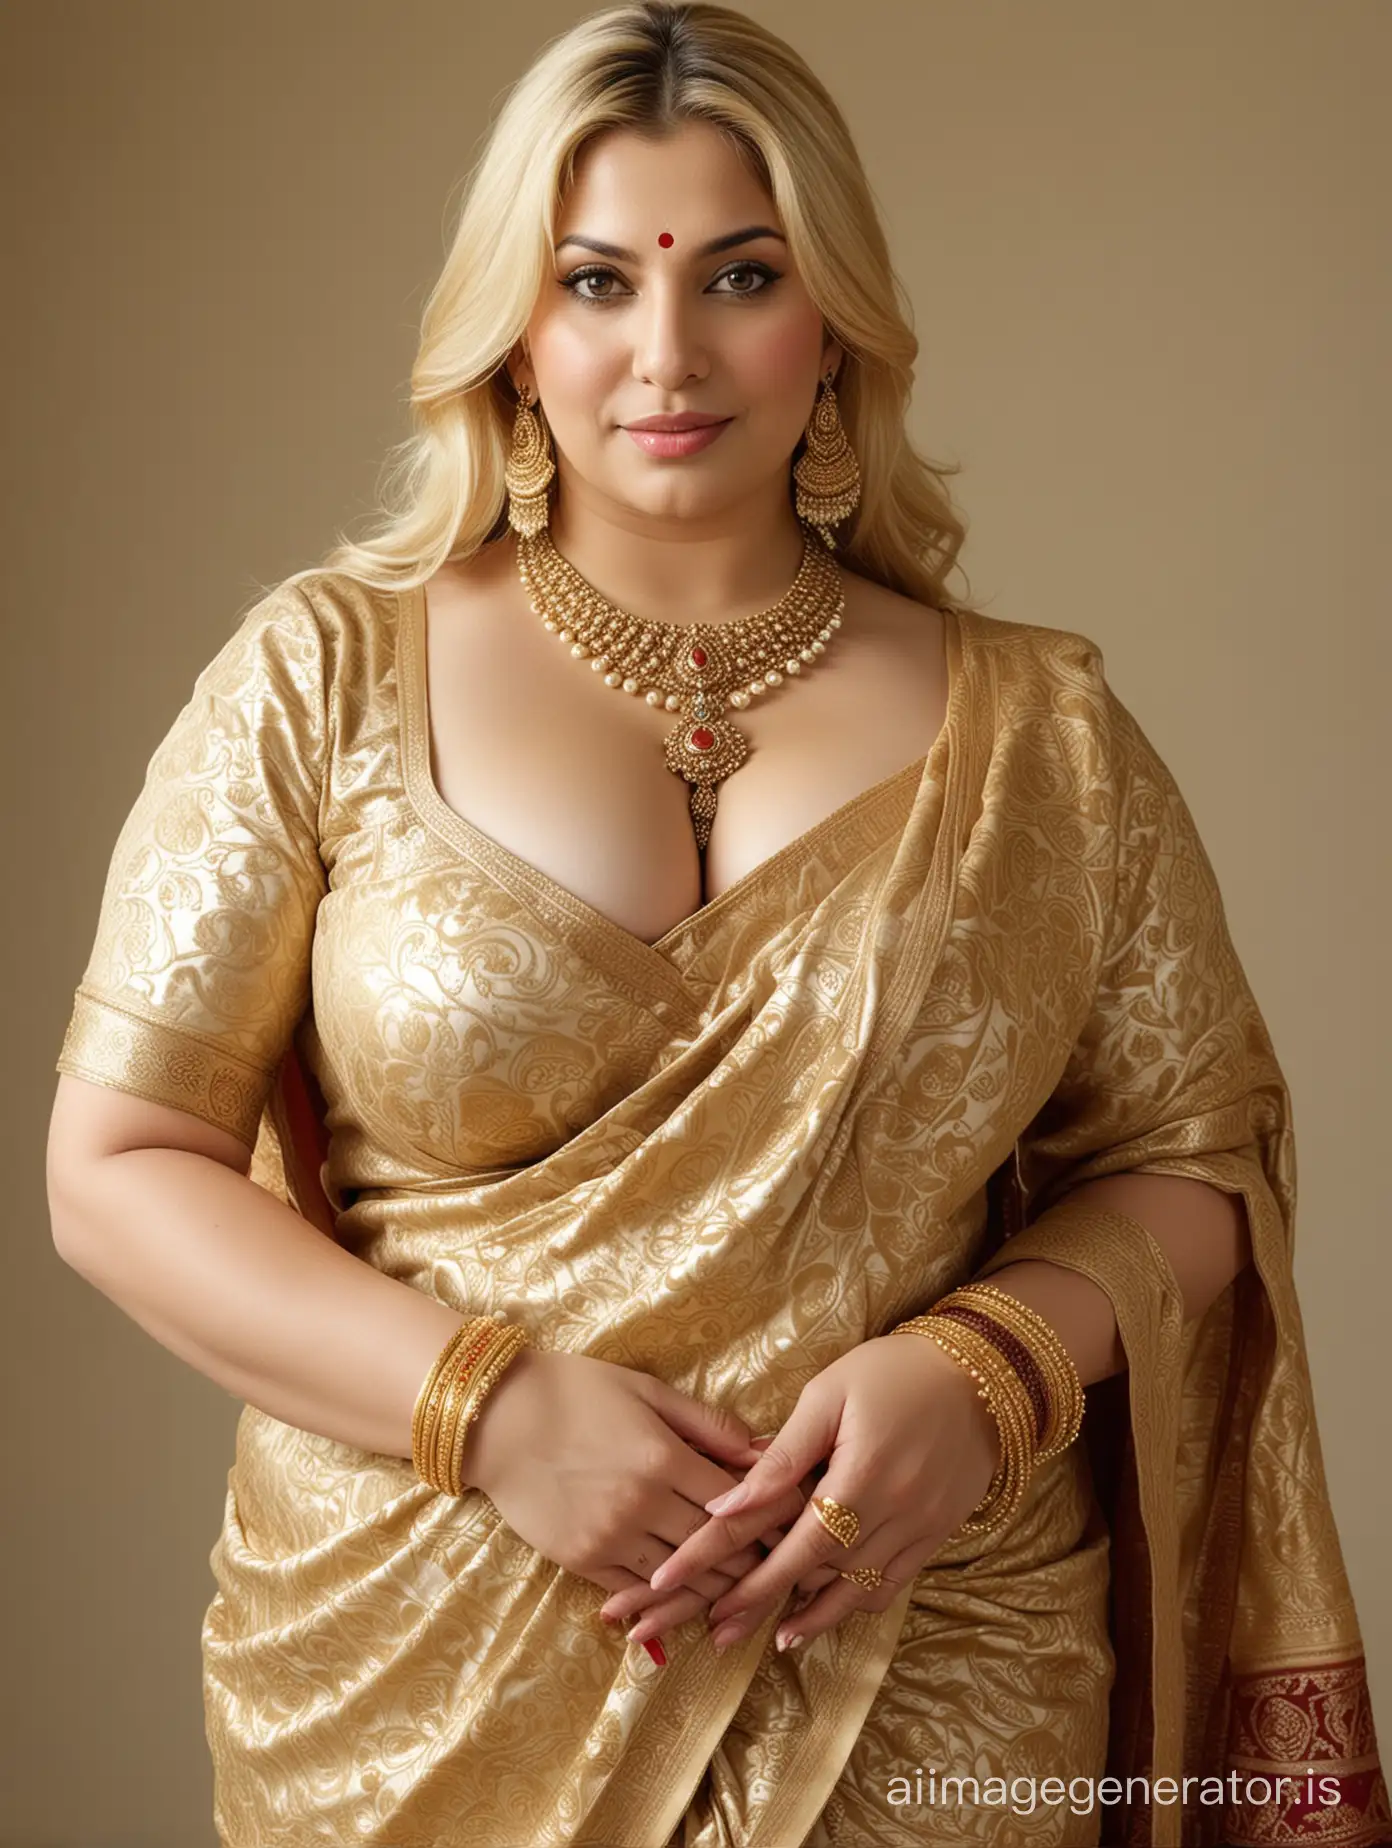 Elegant-Blonde-Woman-in-Traditional-Banarasi-Saree-with-Gold-Jewelry-at-Wedding-Celebration